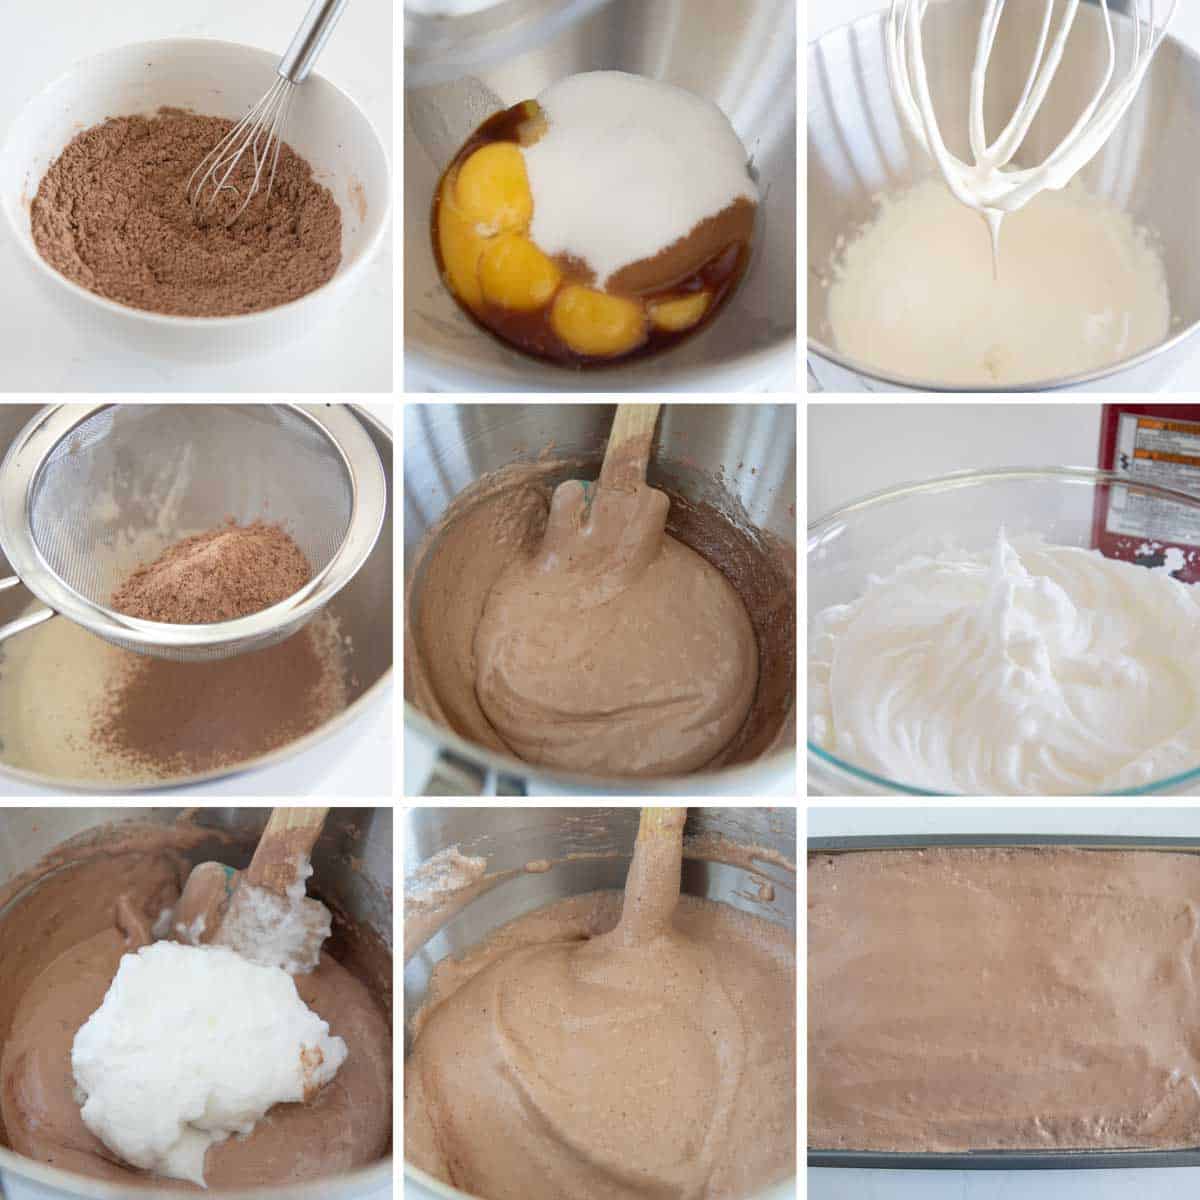 Steps to make the chocolate cake for Bûche de Noël (Yule Log Cake)